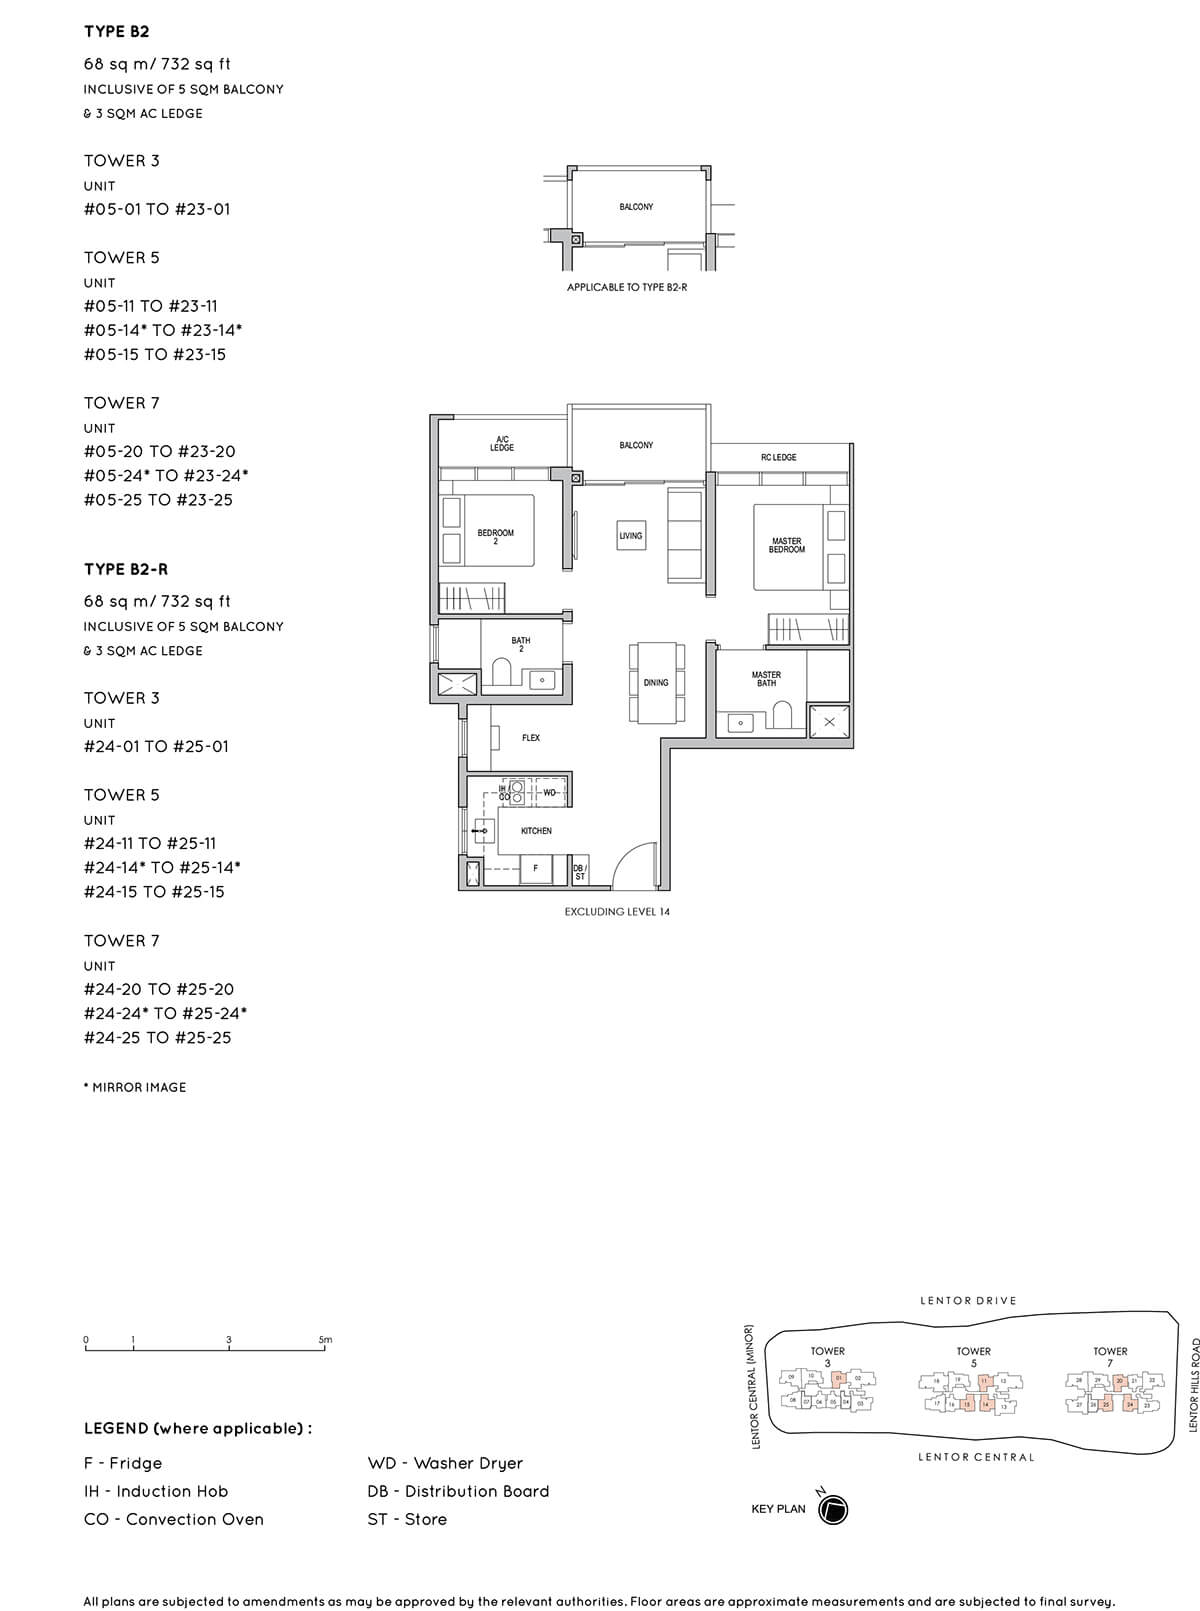 Lentor Modern 2-Bedroom Floorplan Type B2